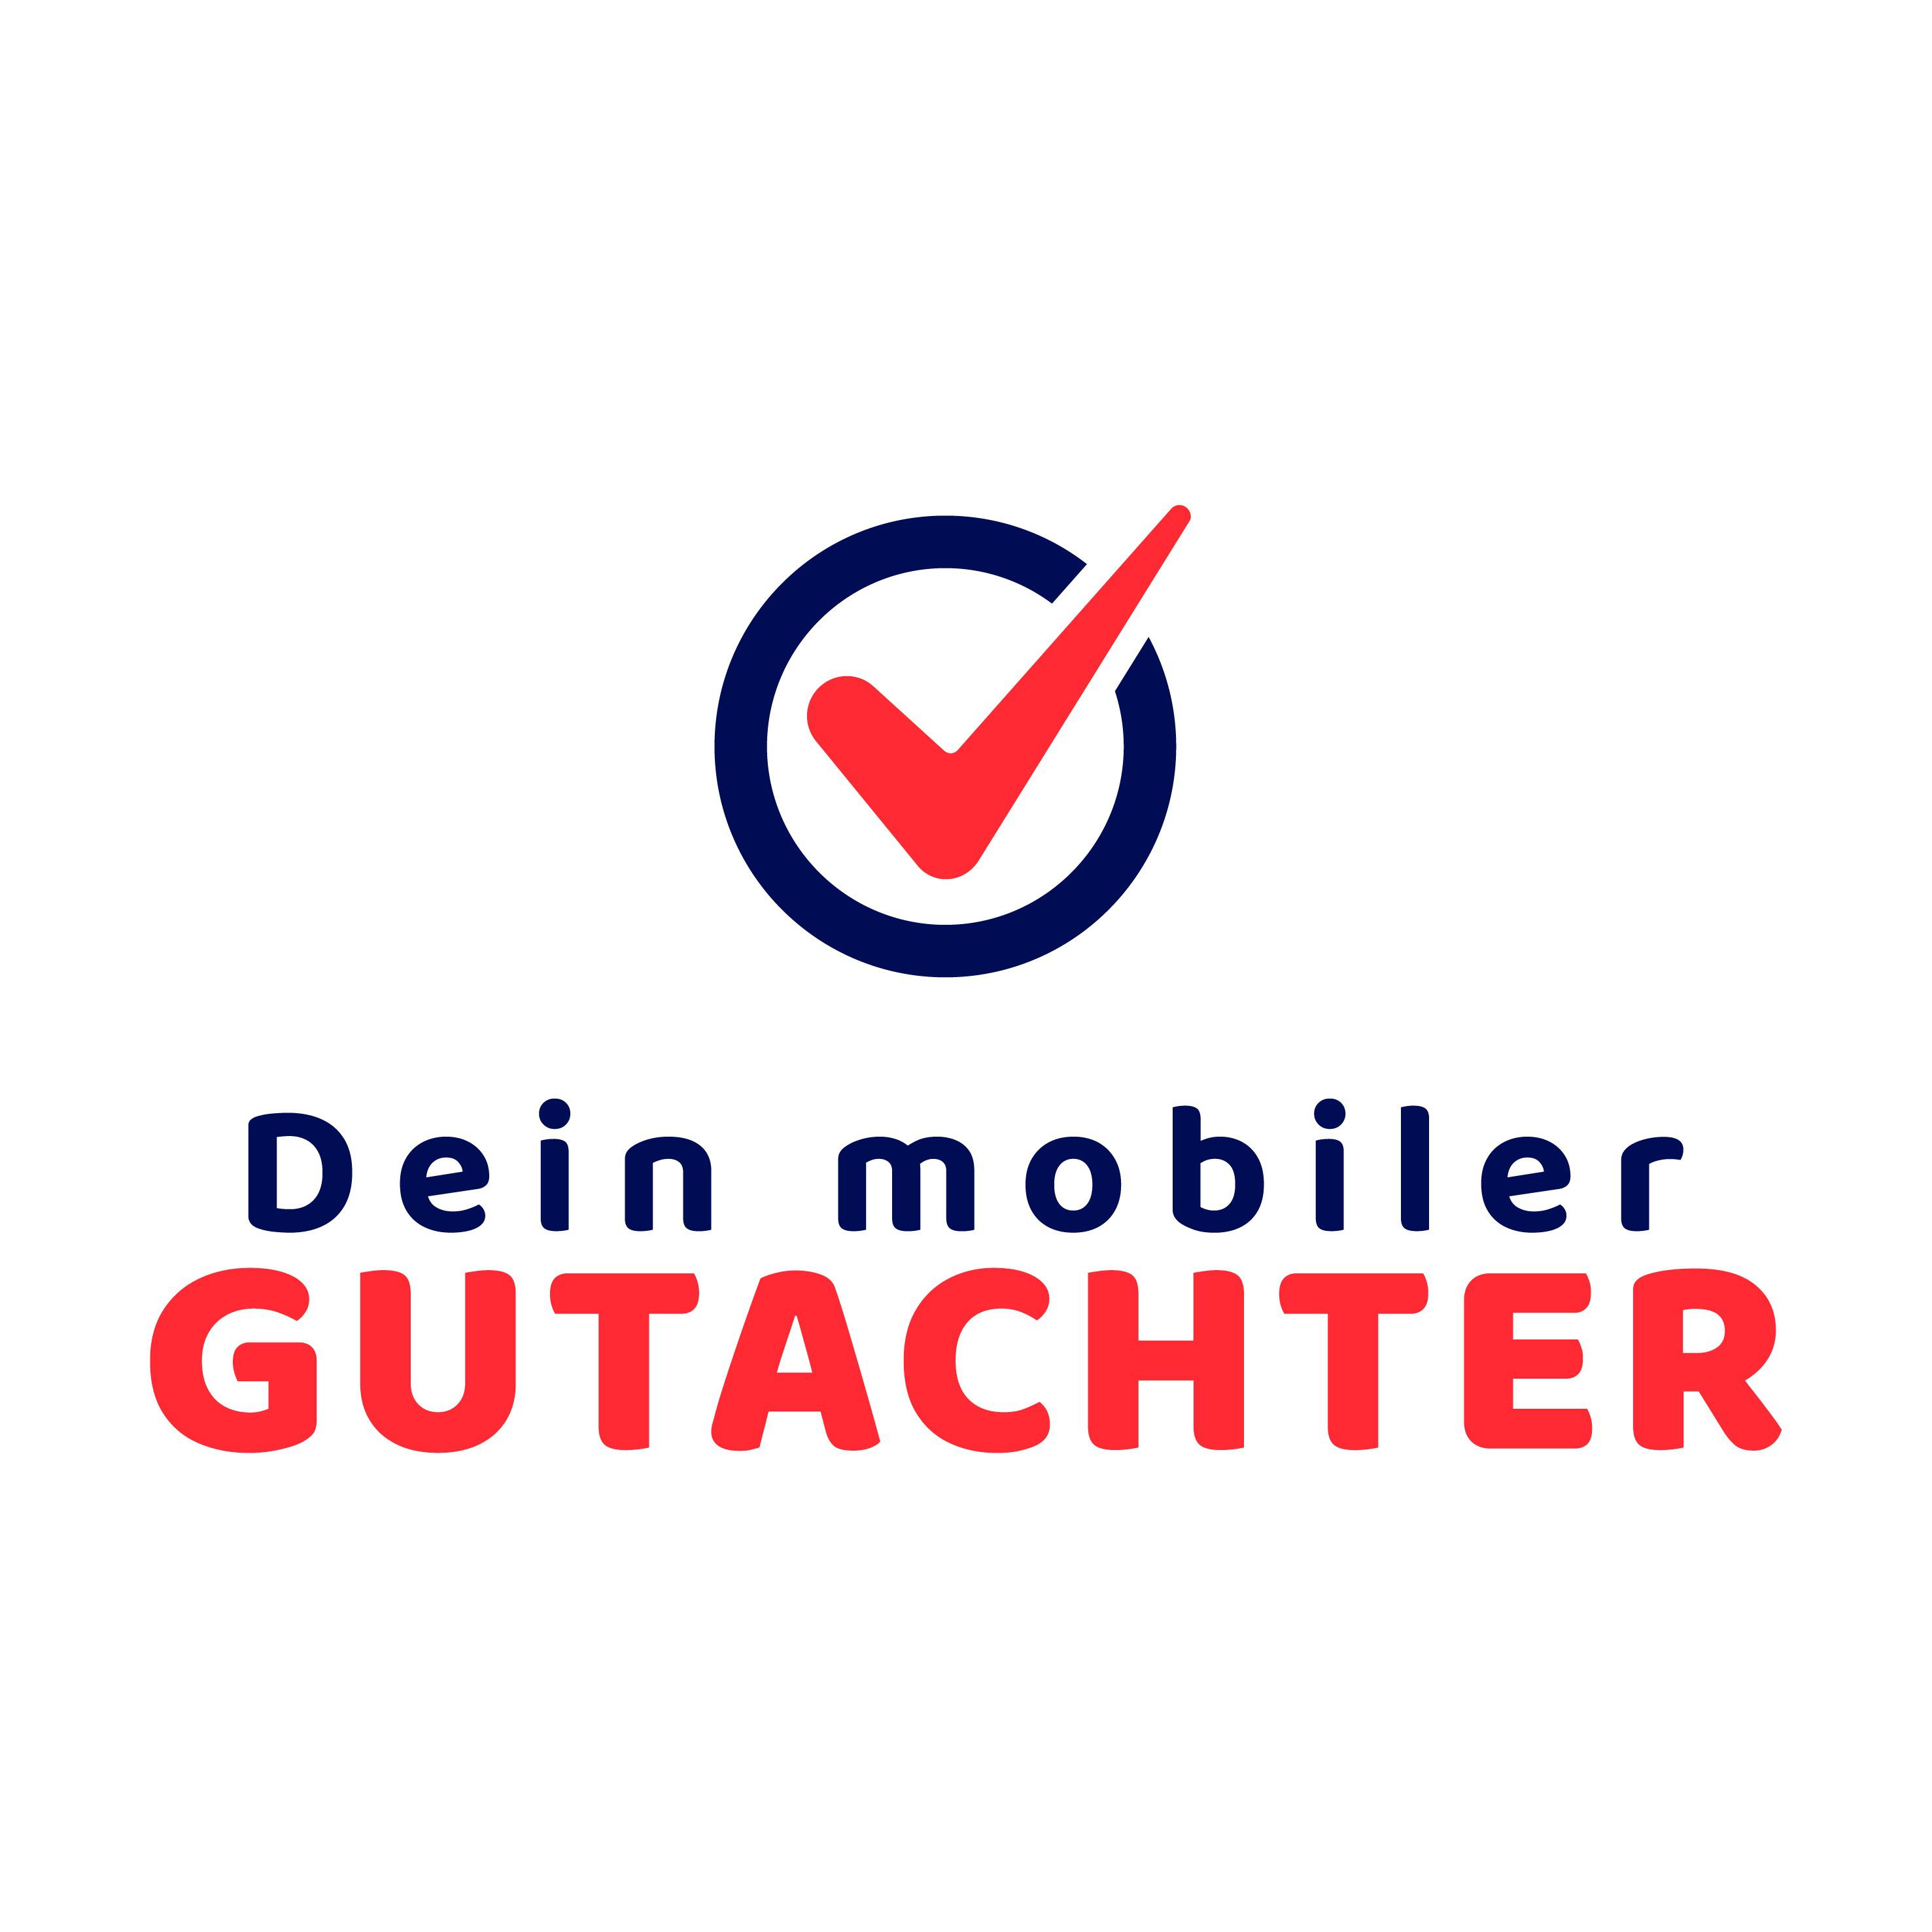 Dein mobiler Gutachter in Berlin - Logo